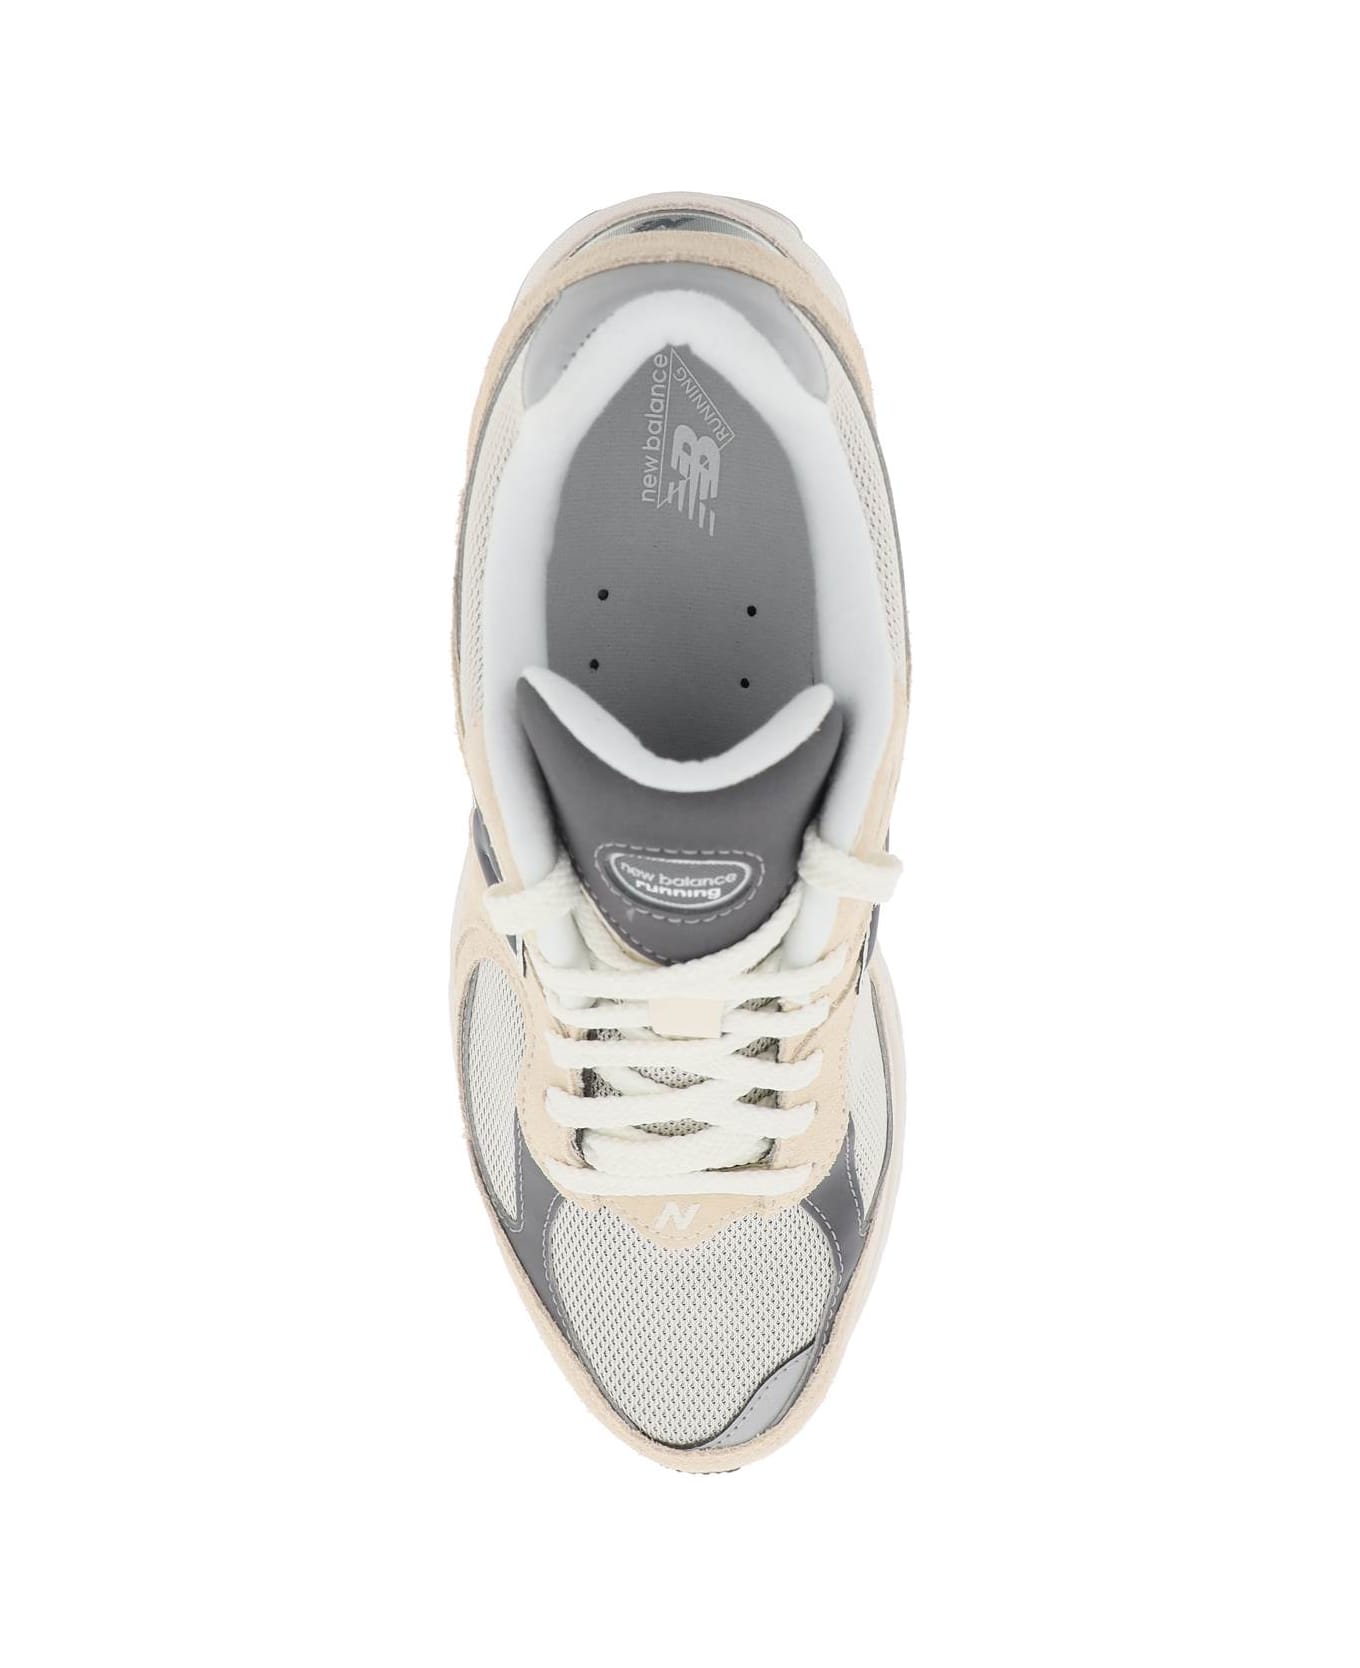 New Balance 2002r Sneakers - SANDSTONE (Grey) スニーカー